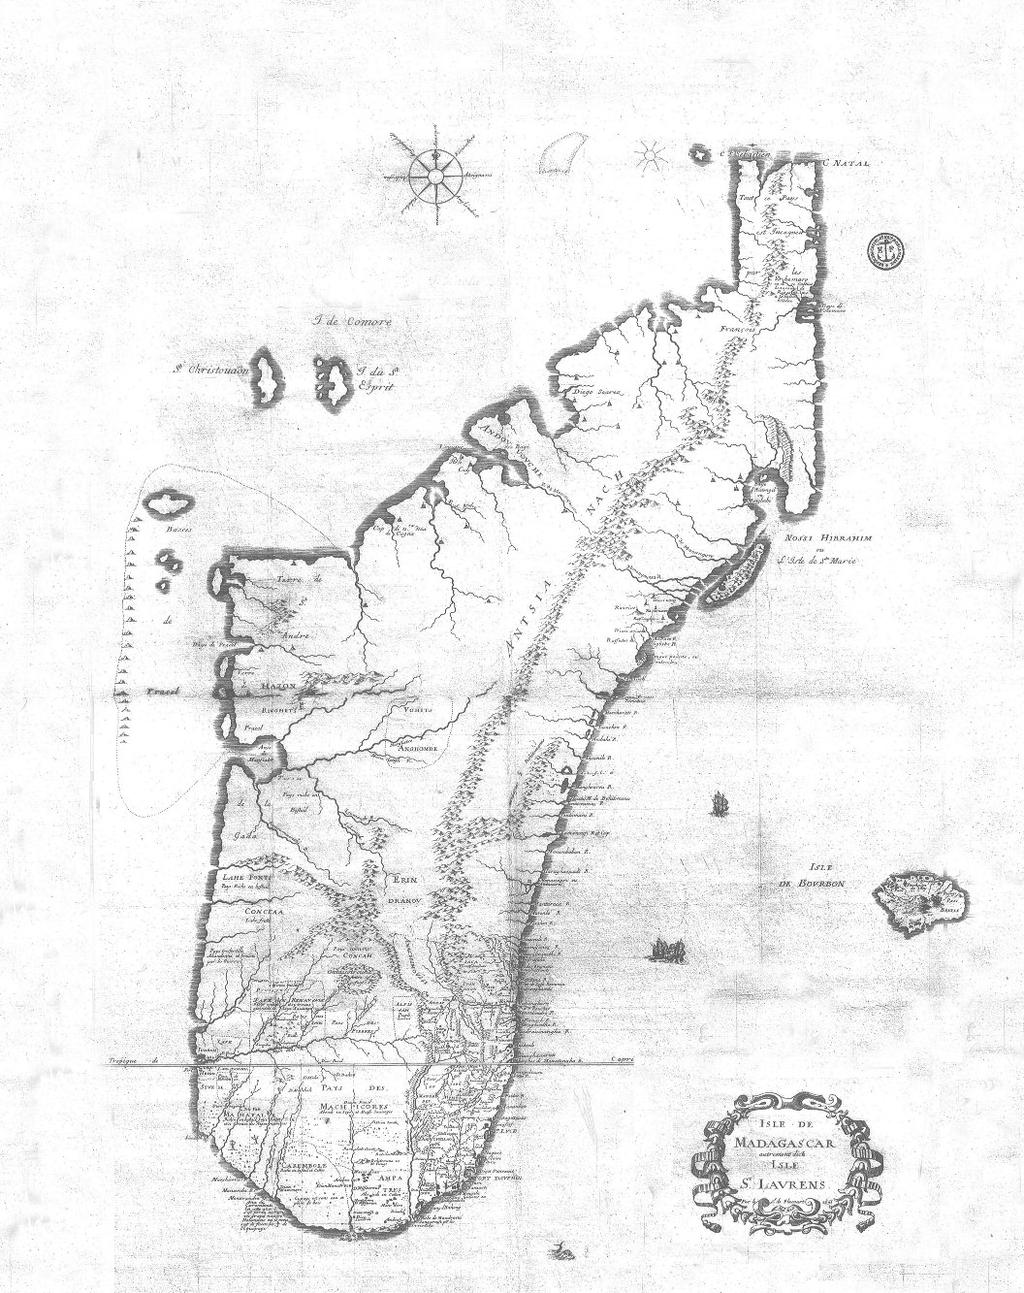 Pedro de Mascarenhas gives the name Santa Apolonia to a virgin island, the future Bourbon, La Réunion. 1527 Settlement of the Portuguese in the Anosy region. 1793 Bourbon island becomes Réunion.